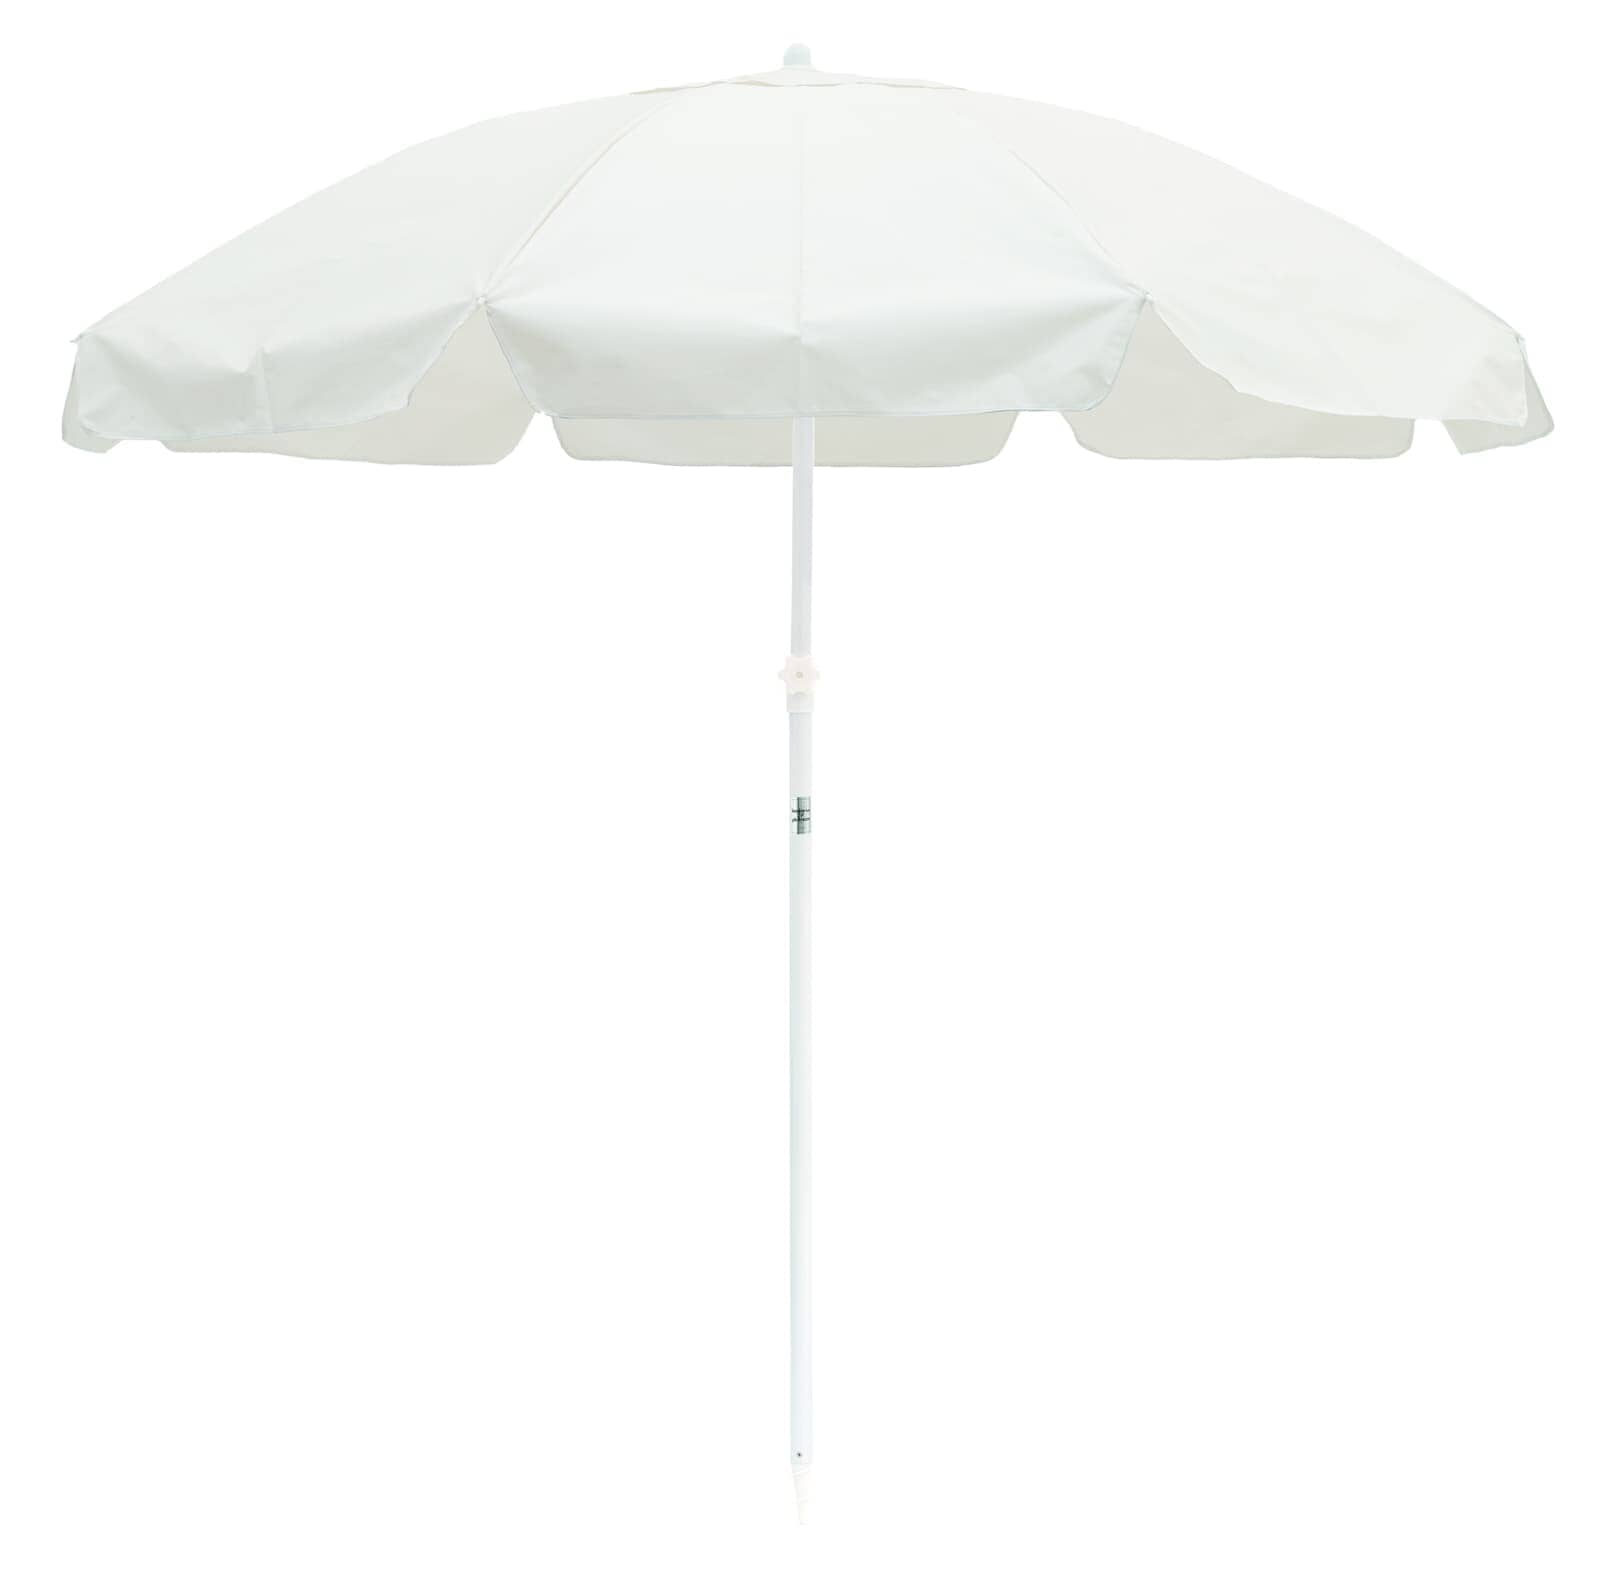 studio image of white family beach umbrella